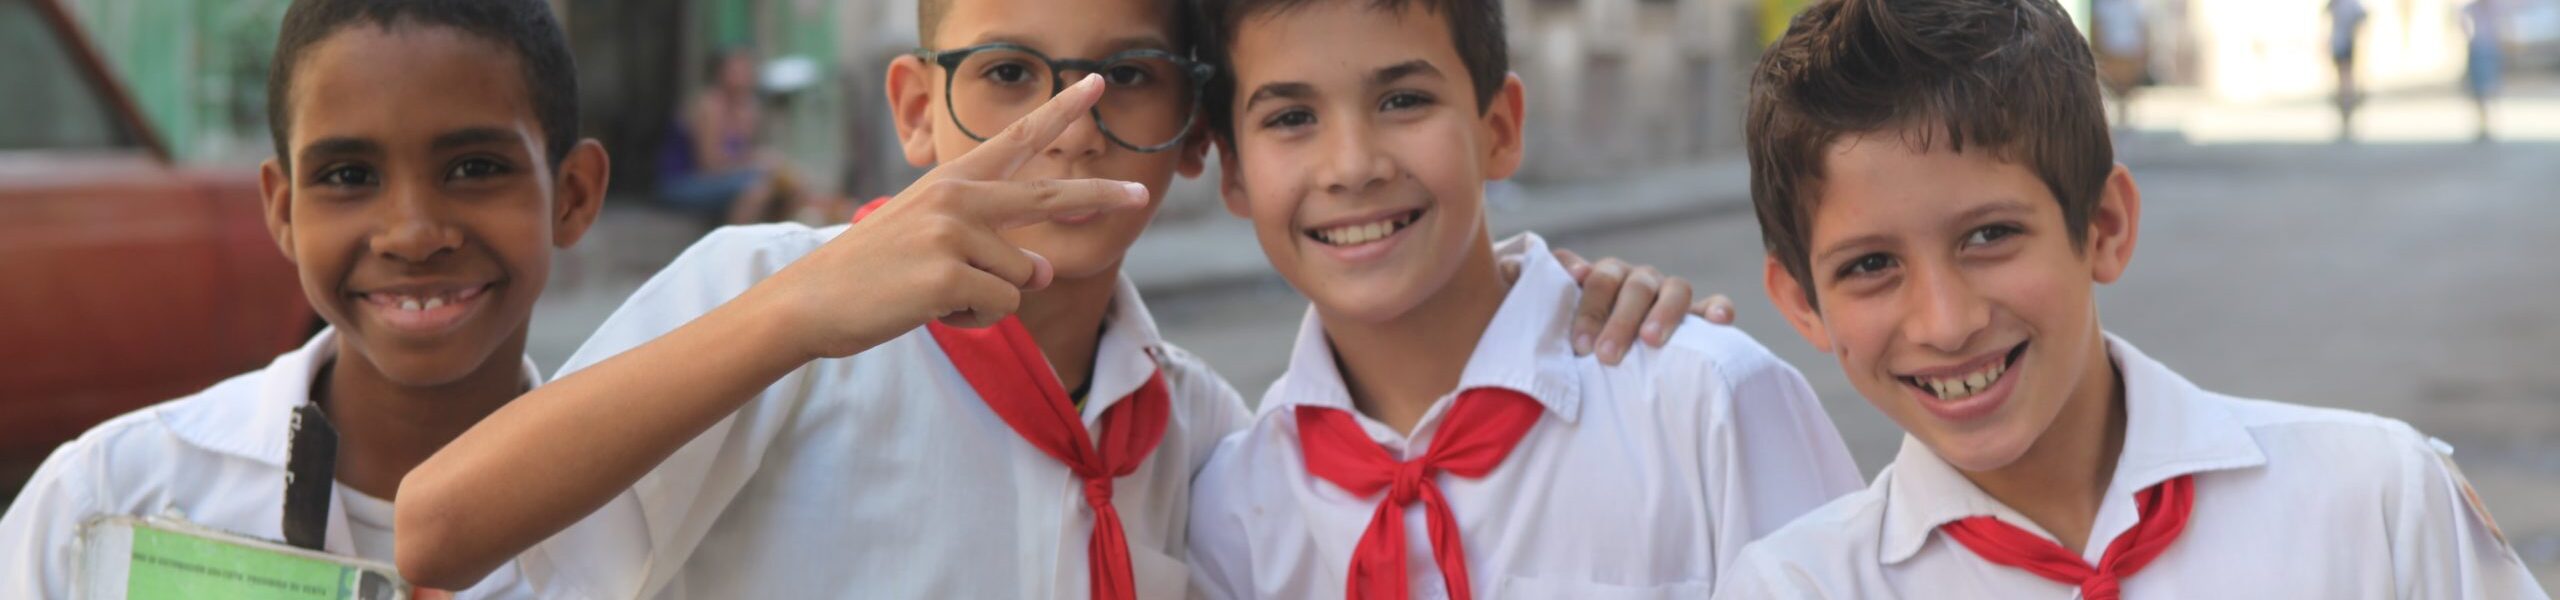 Havana, Cuba-February 8, 2013-School boys  mug for the camera while holding their school books.